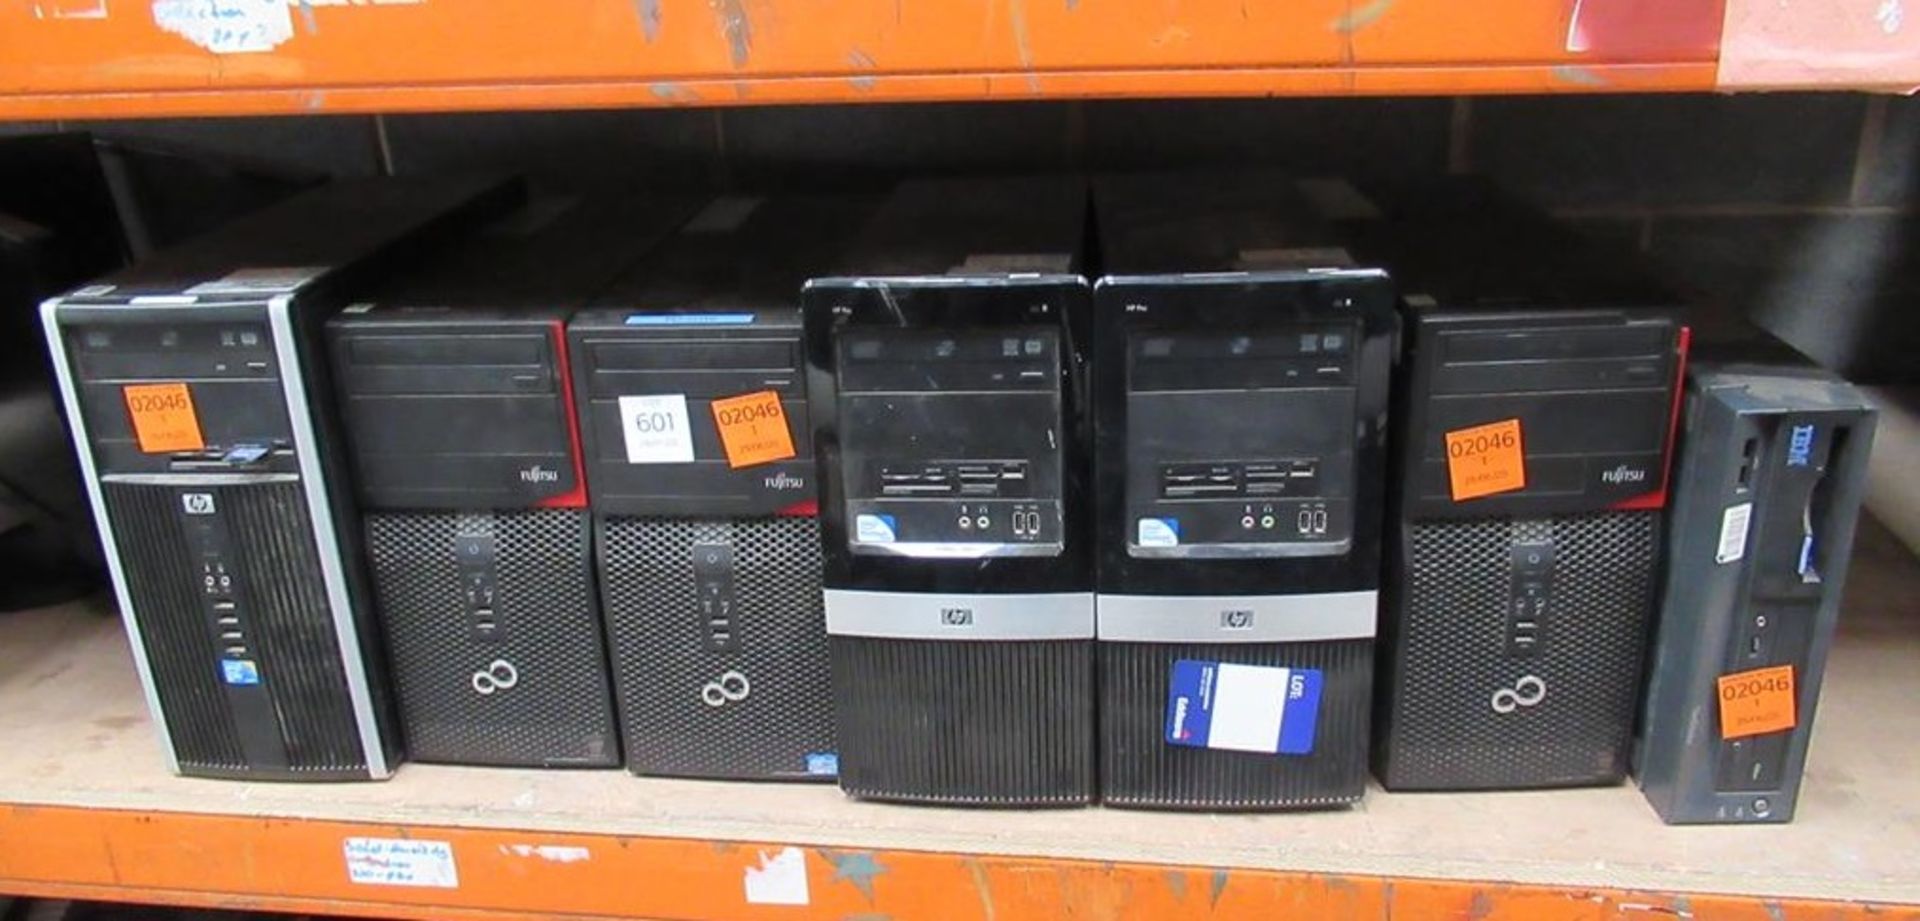 7 x PC towers 3 x Fujitsu i3, 2 x HP Pentium, 1 x HP Core 2 and 1 x other